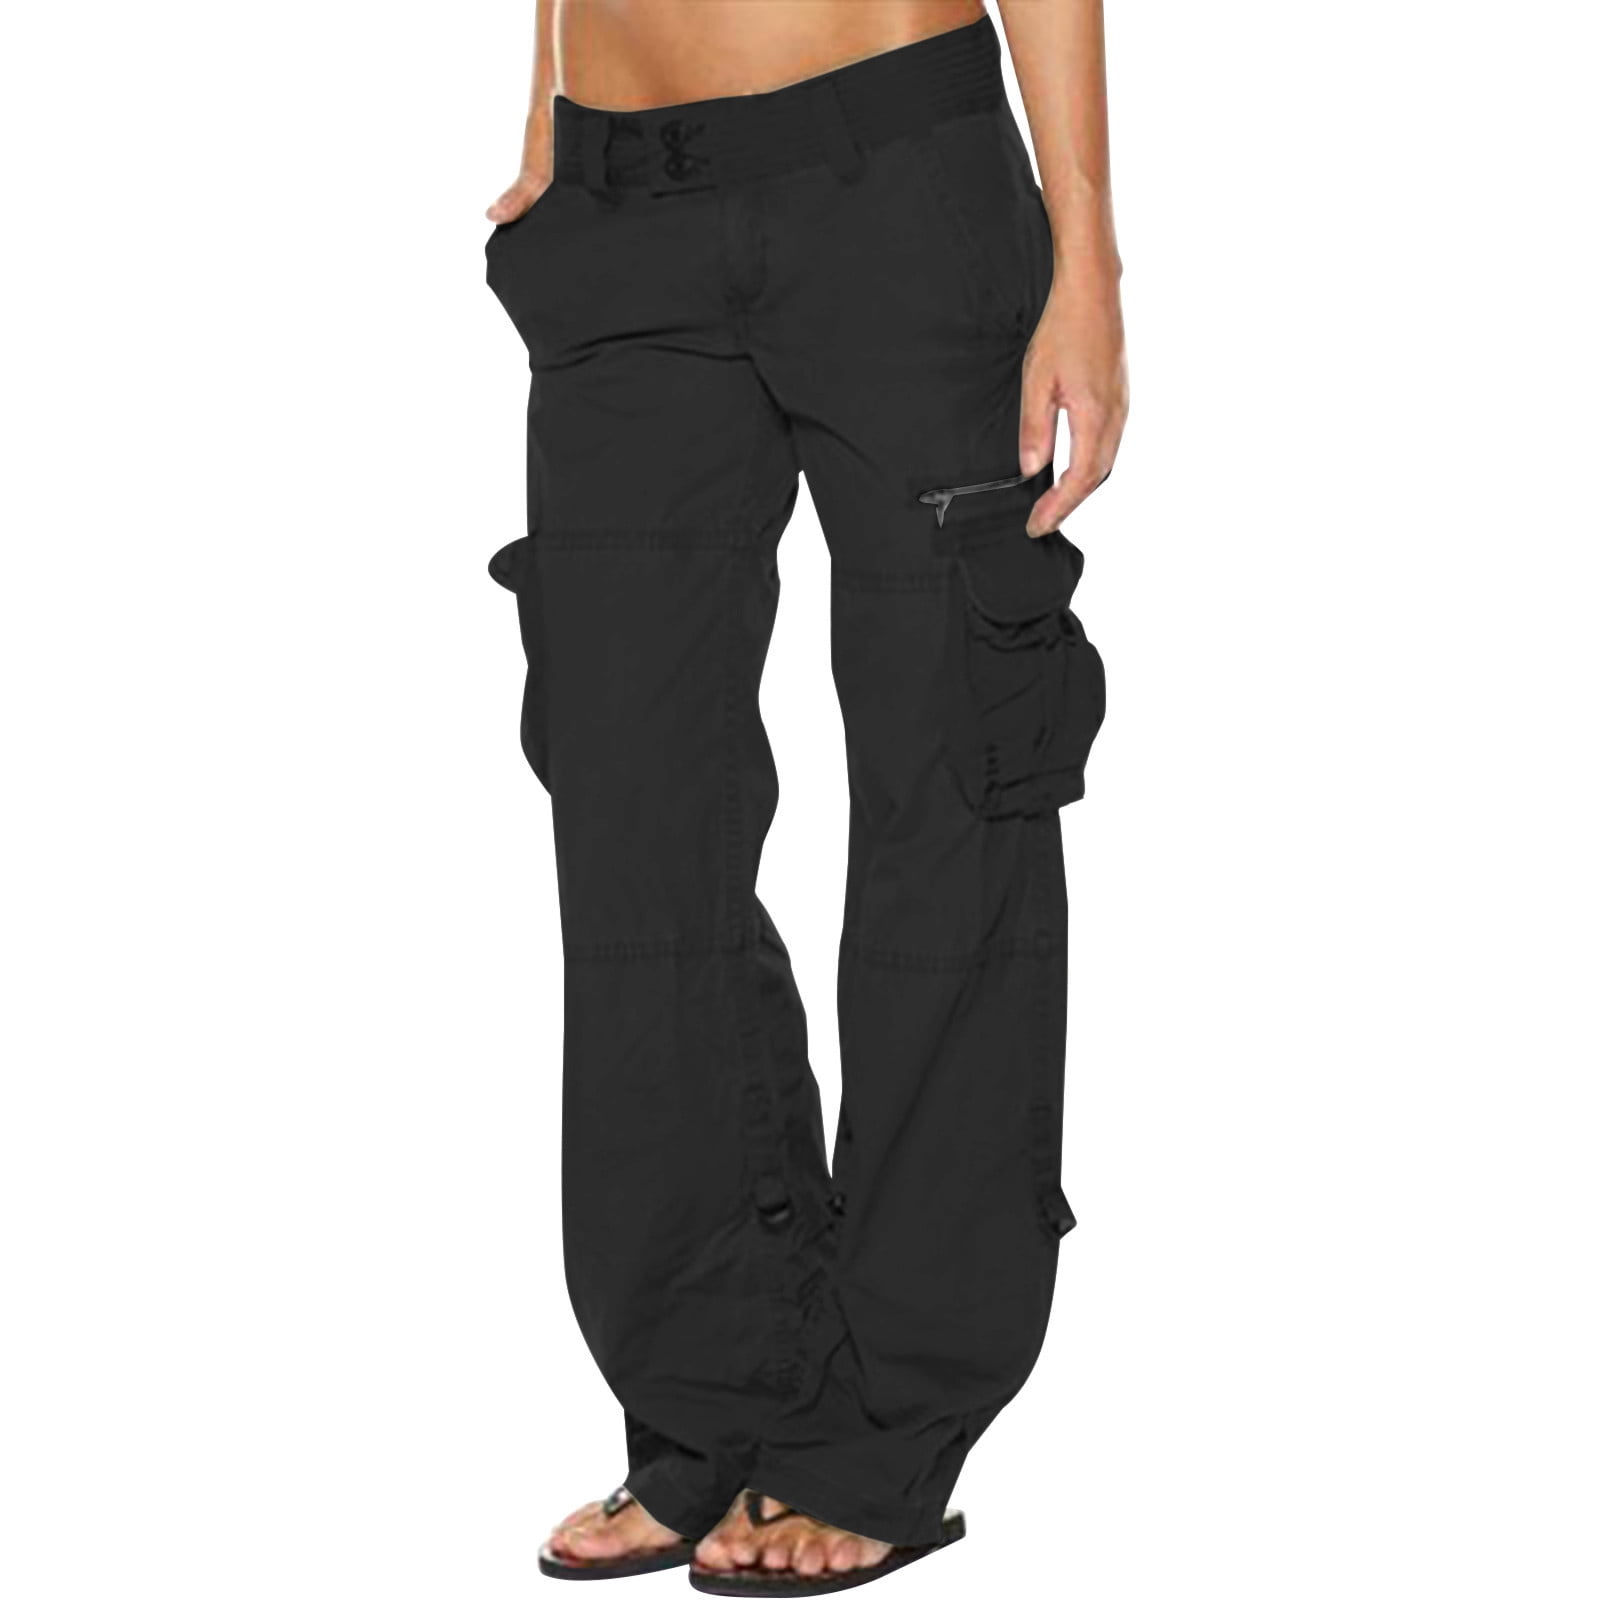 CaComMARK PI Capris/Cargo Pants for Women Plus Size Ladies Solid